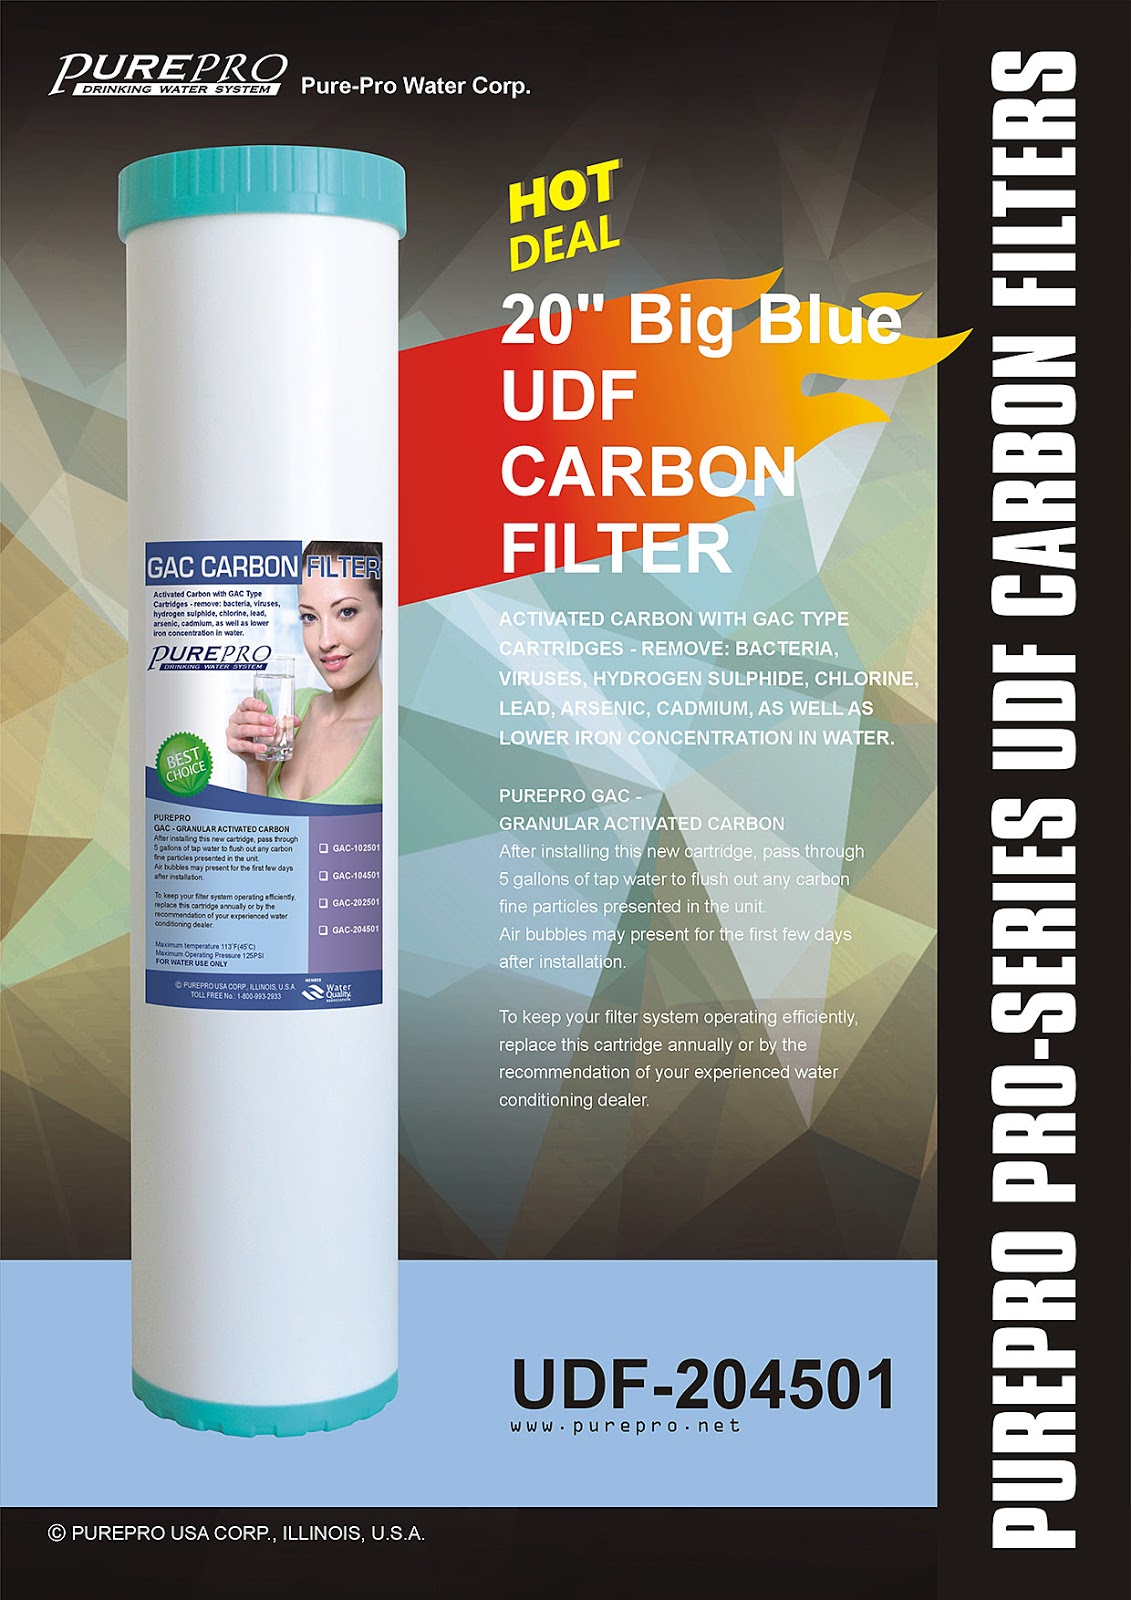 PurePro® USA 20" Big Blue UDF Carbon Filter - PurePro UDF-204501